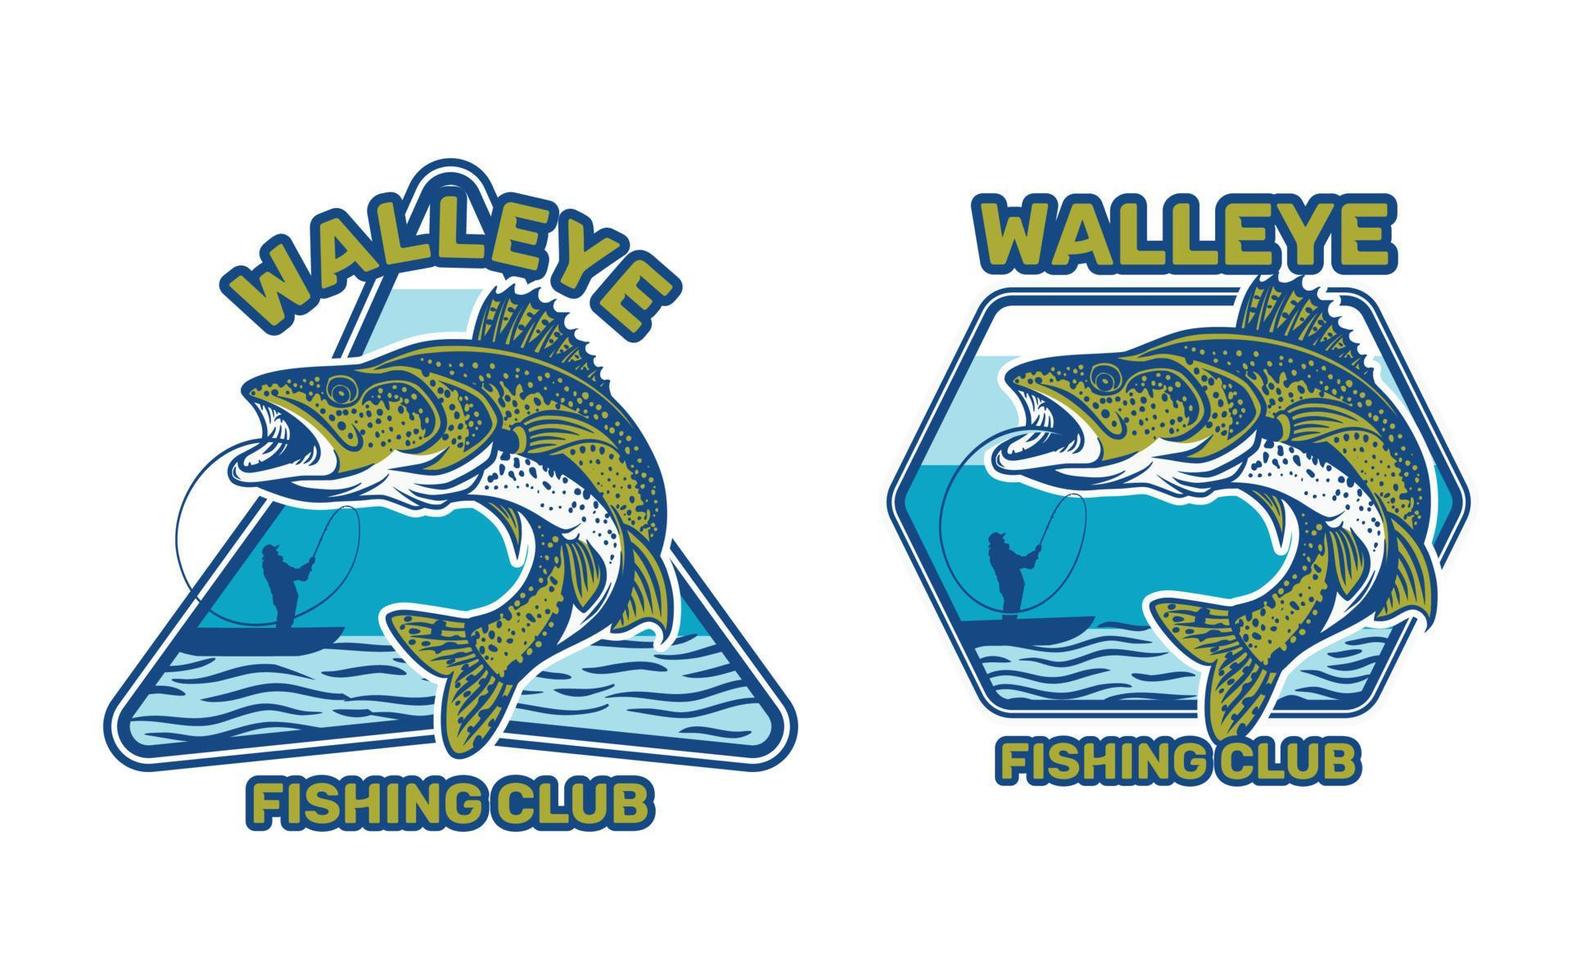 Walleye fishing club vintage badge emblem illustration vector